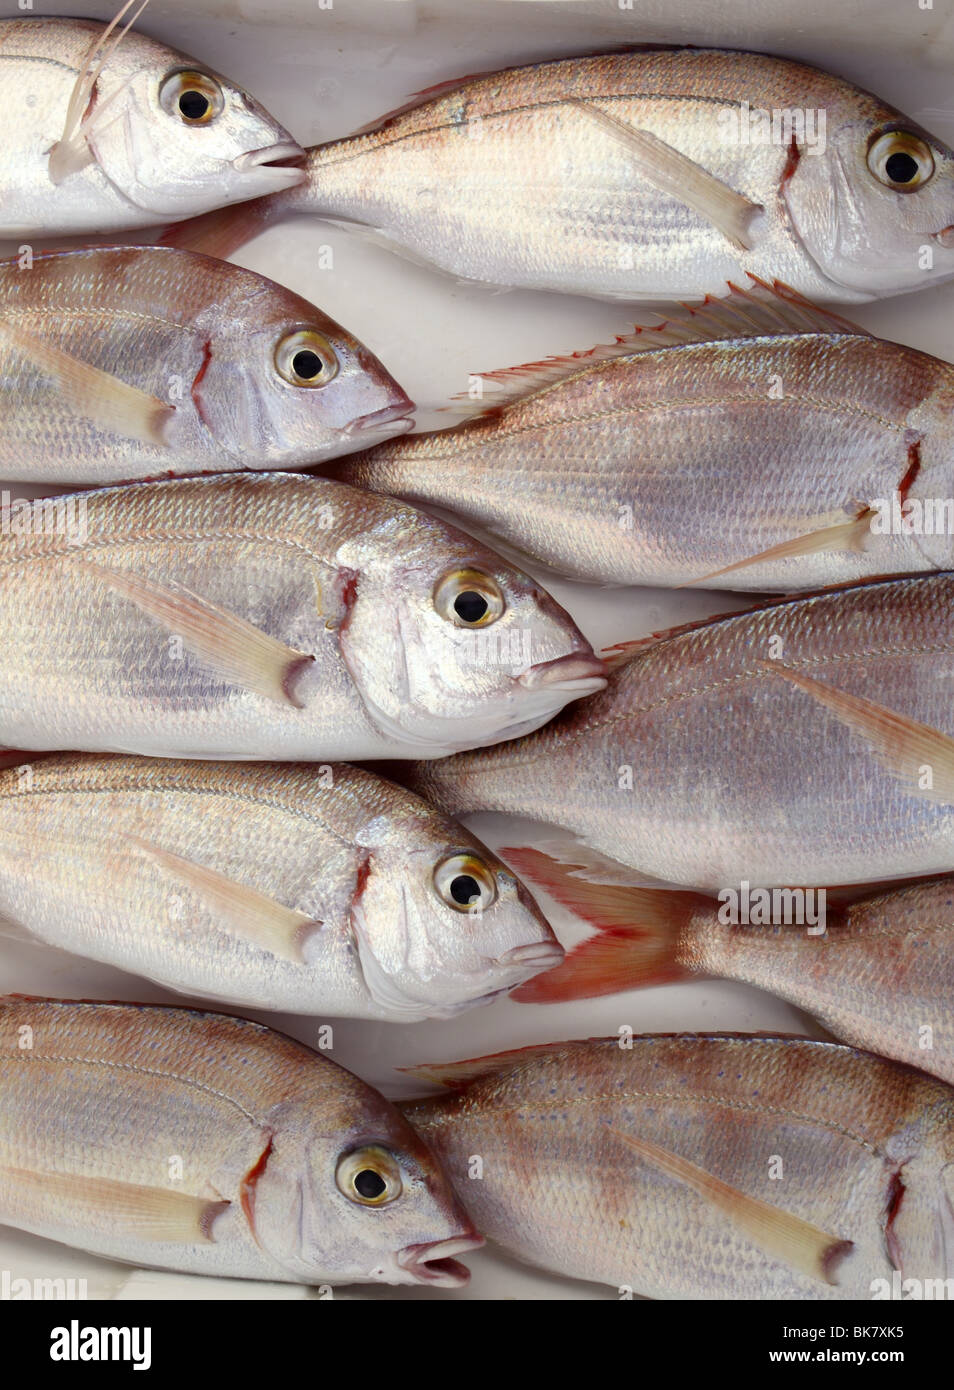 hørbar Automatisering nationalsang common pandora fish pagellus erythrinus mediterranean catch Stock Photo -  Alamy